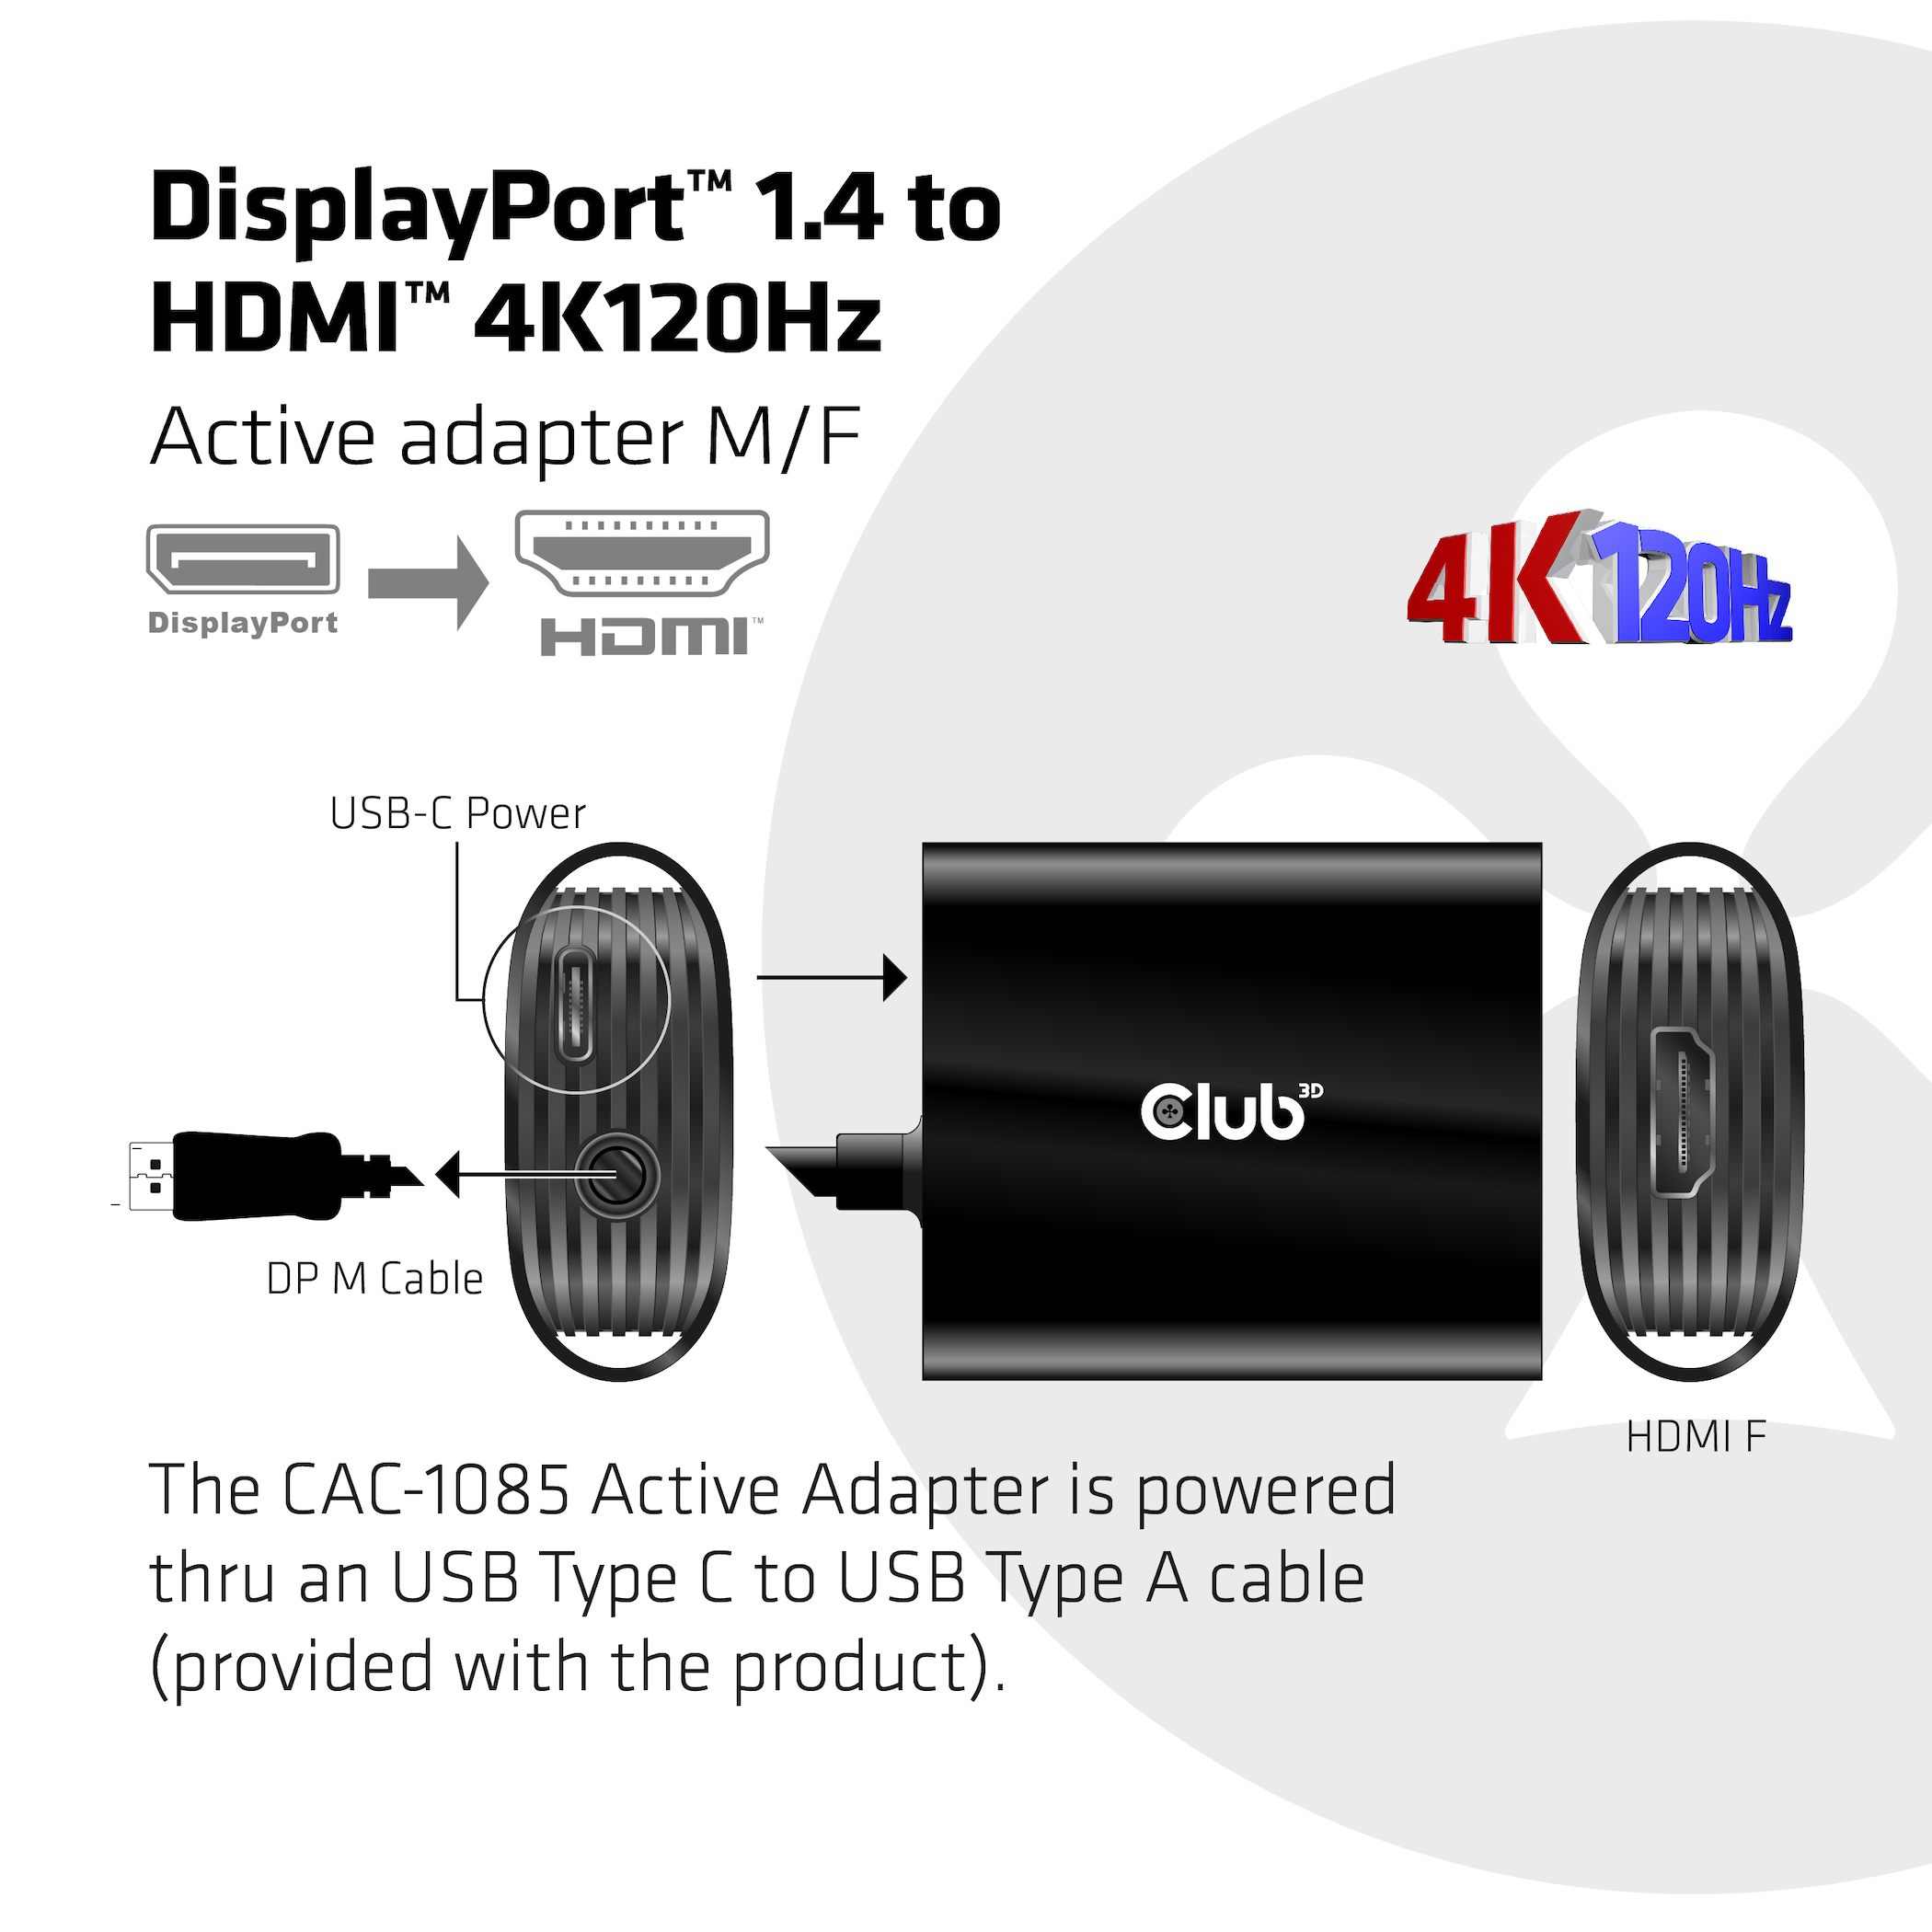 DISPLAYPORT 1.4 TO HDMI 4K120HZ HDR ACTIVE ADAPTER M/F